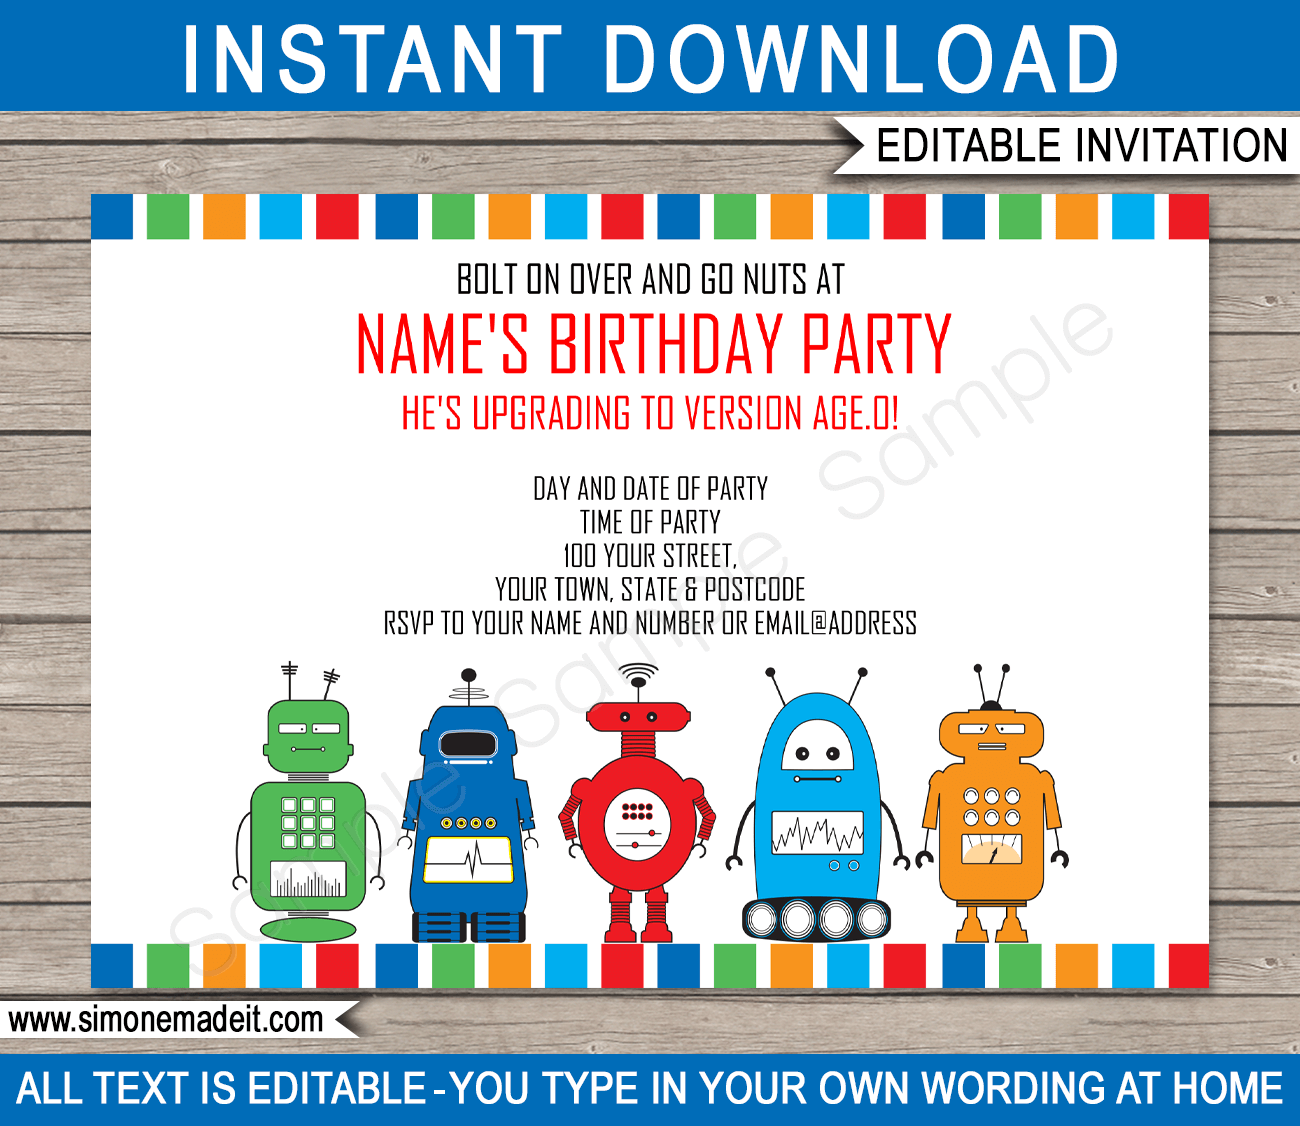 Robot Party Invitations | Birthday Party | Editable DIY Theme Template | INSTANT DOWNLOAD $7.50 via SIMONEmadeit.com